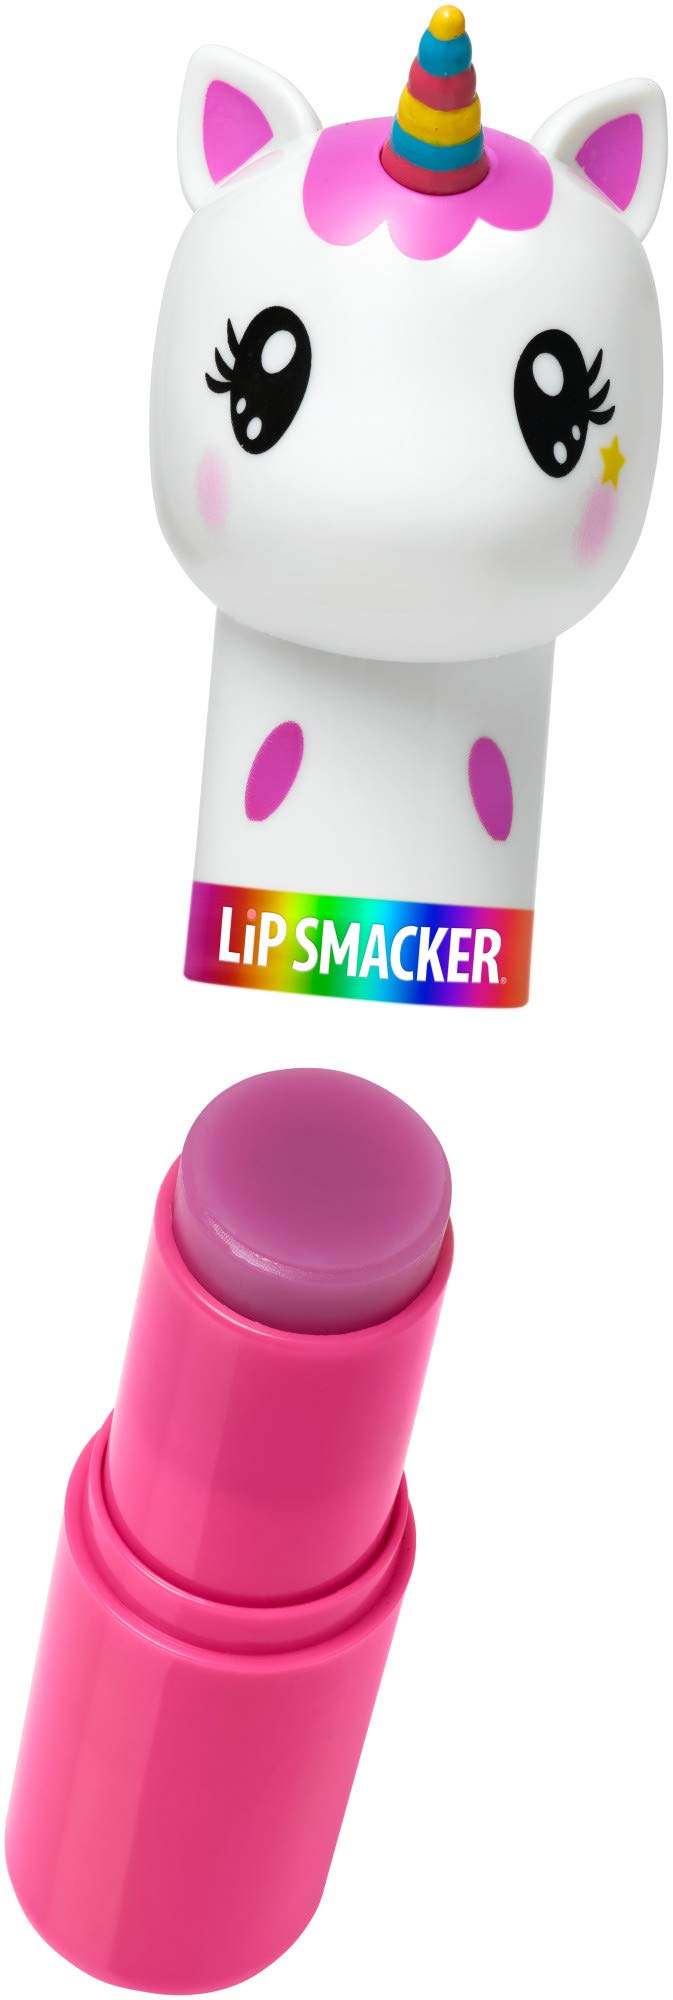 Lip Smacker Lippy Pal Unicorn Flavored Lip Balm | Clear Matte | Unicorn Magic | For Kids, Girls | Stocking Stuffer | Christmas Gift